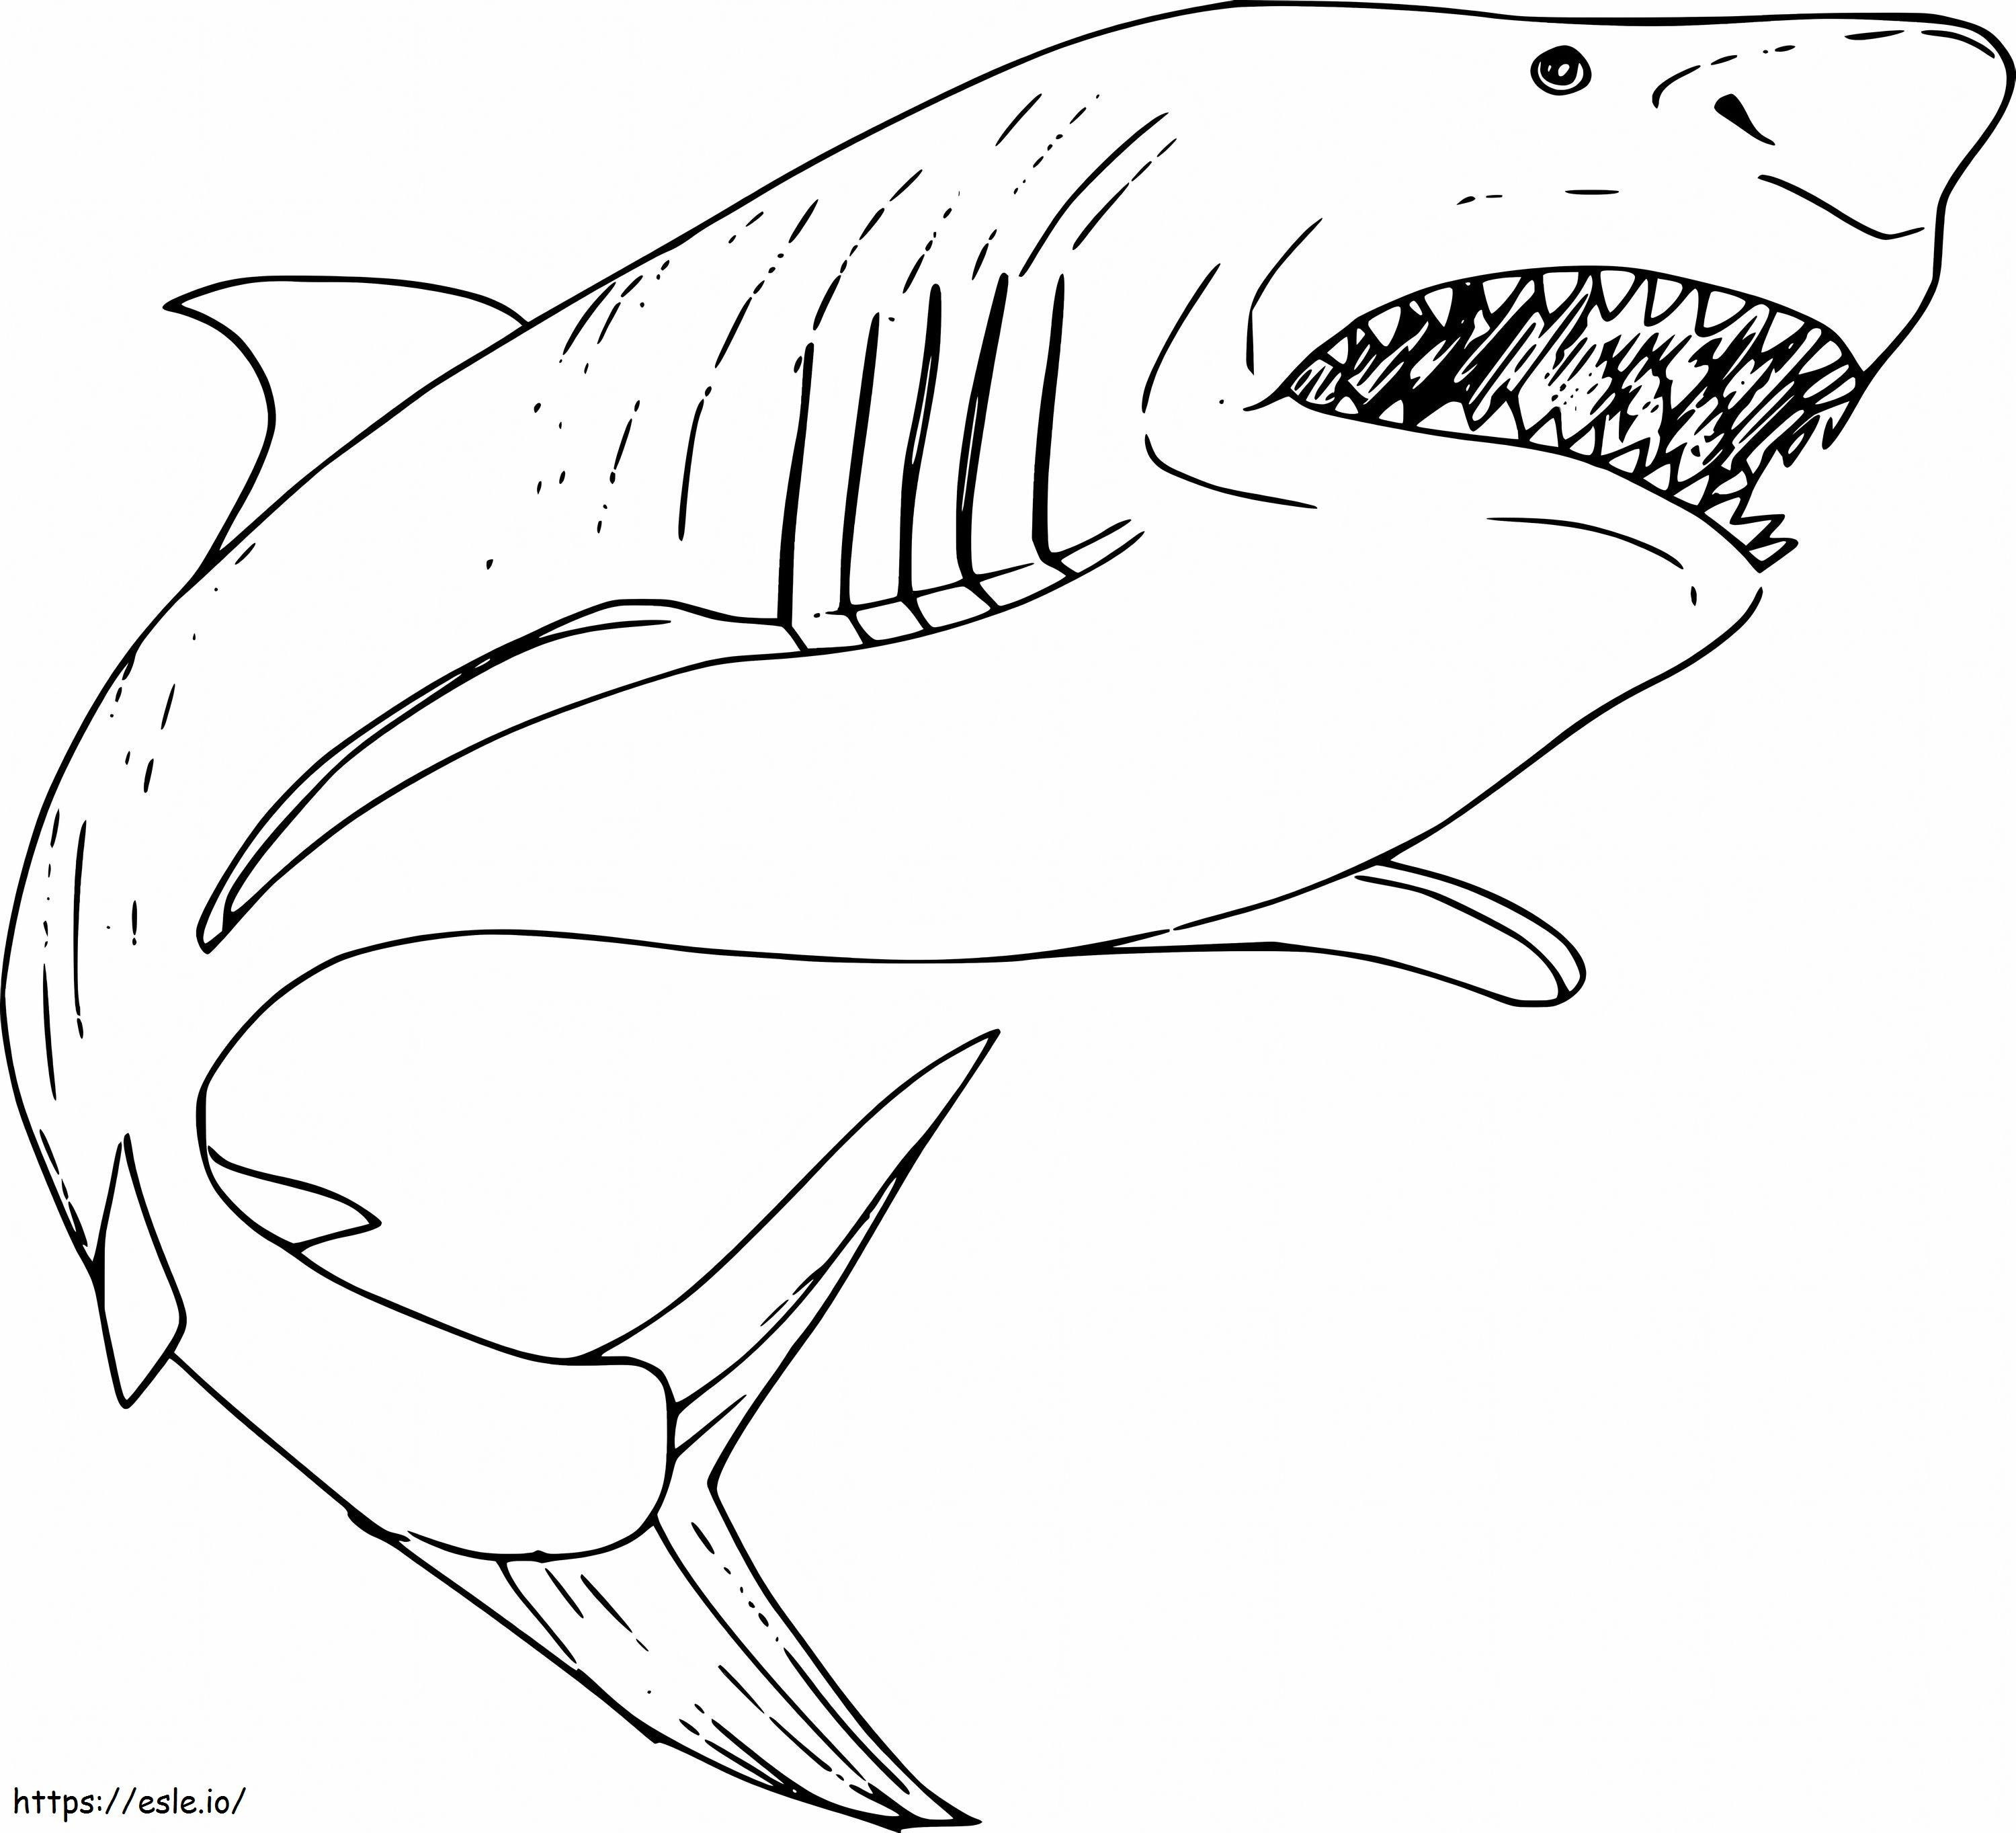 Coloriage Tiburon Megalodon Grande à imprimer dessin